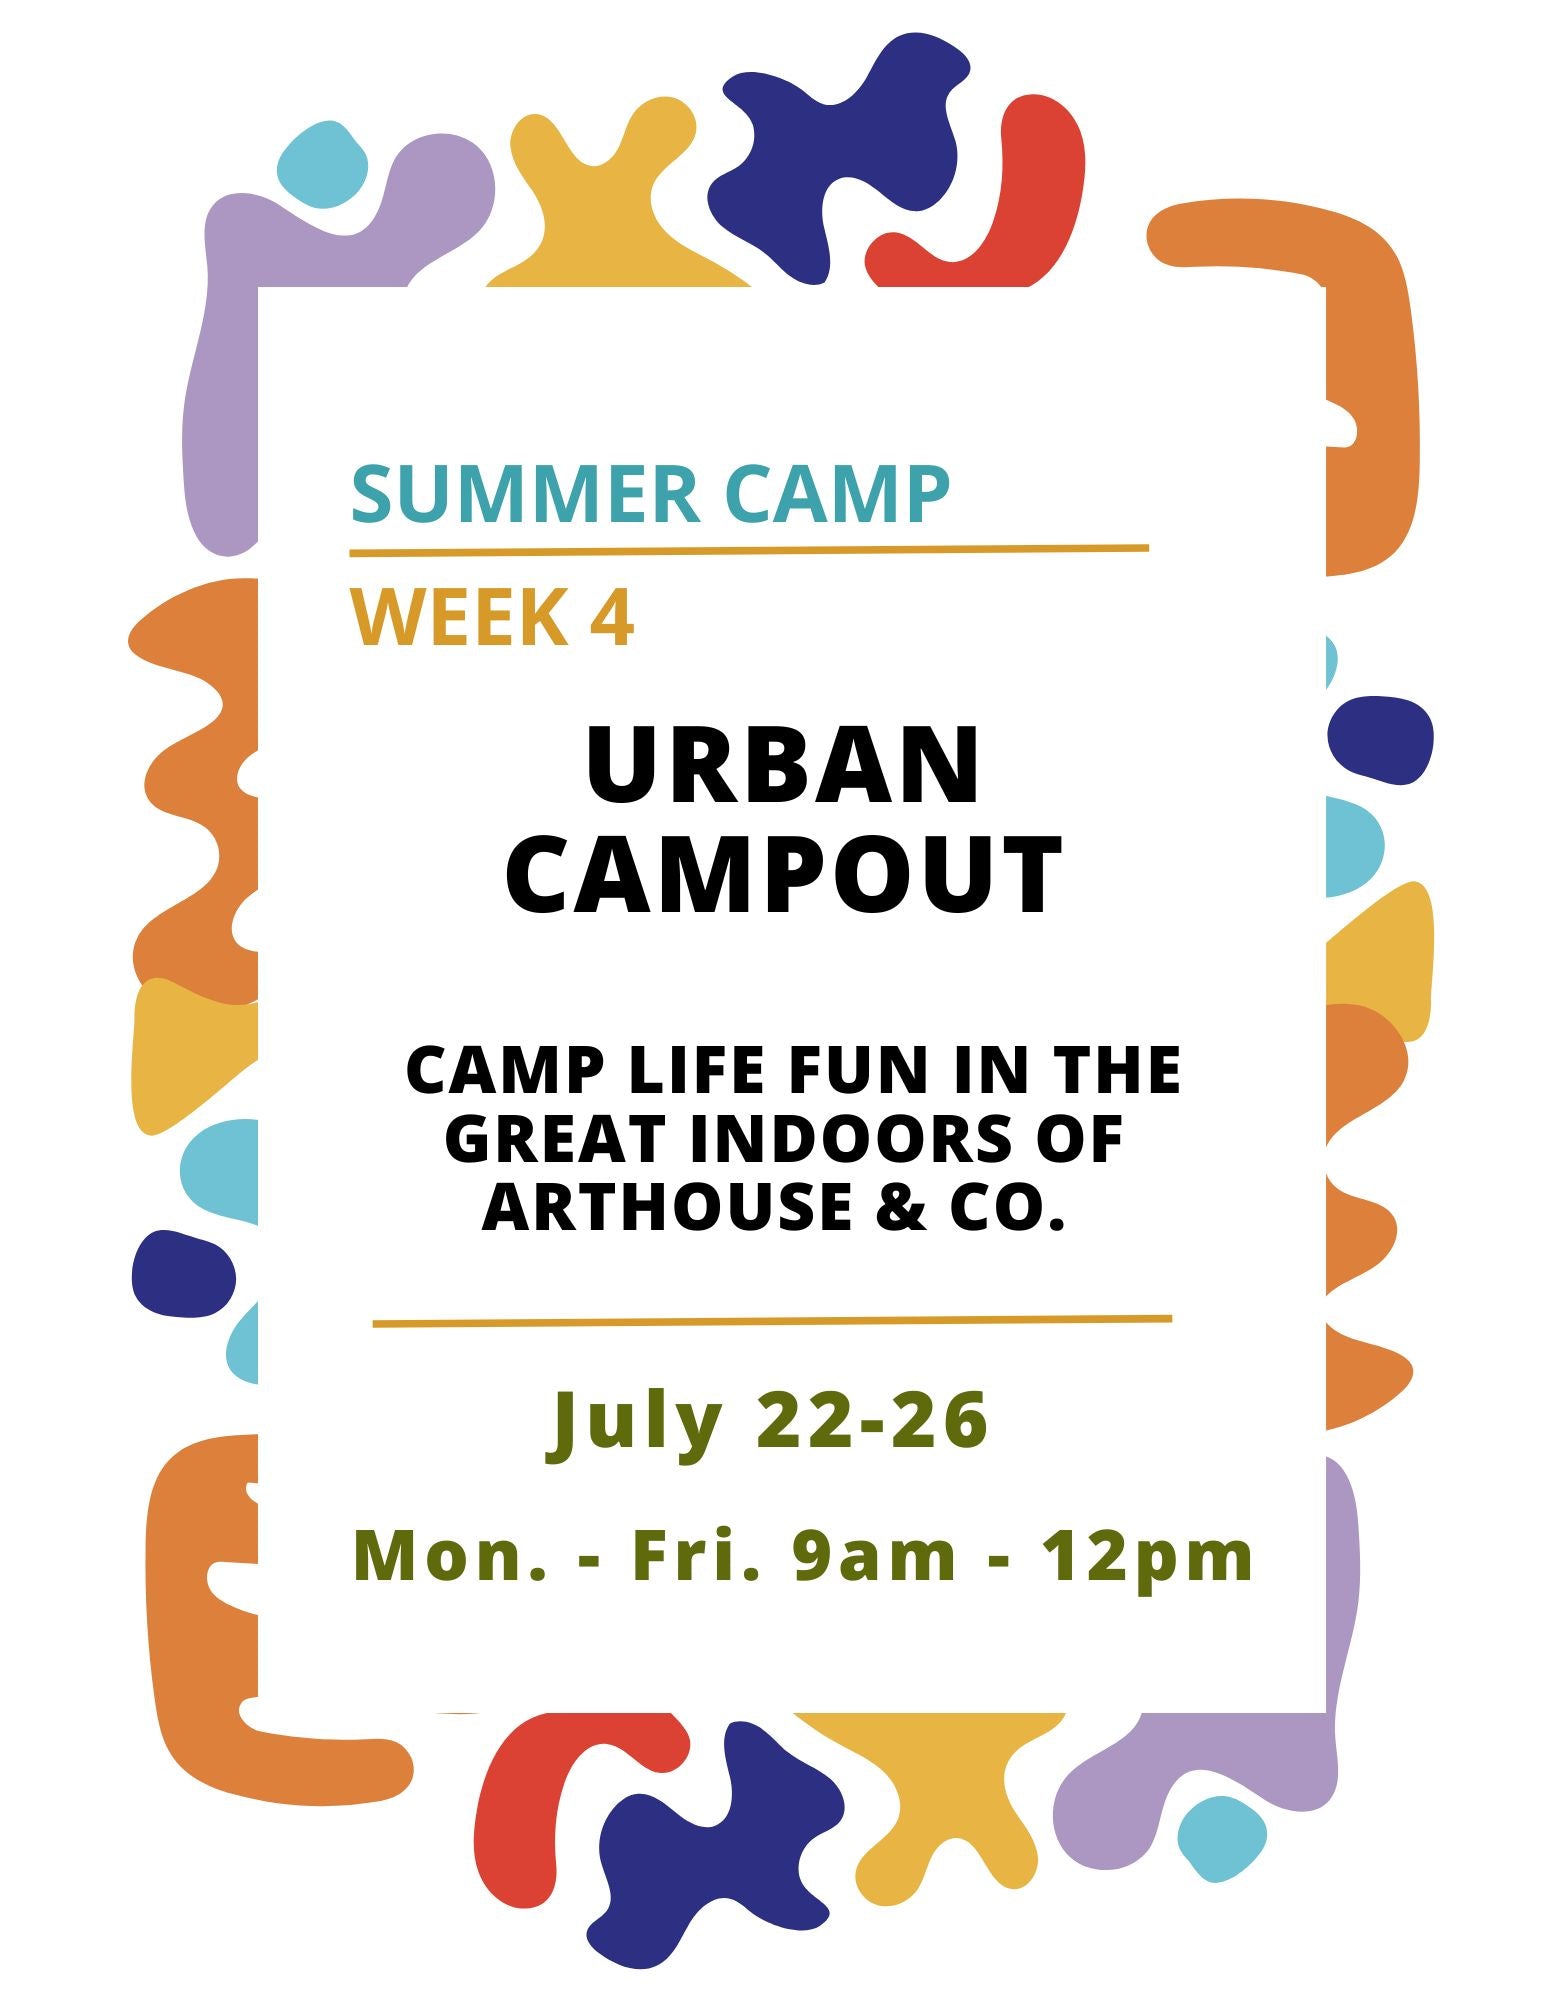 Summer Camp Week 4: Urban Campout